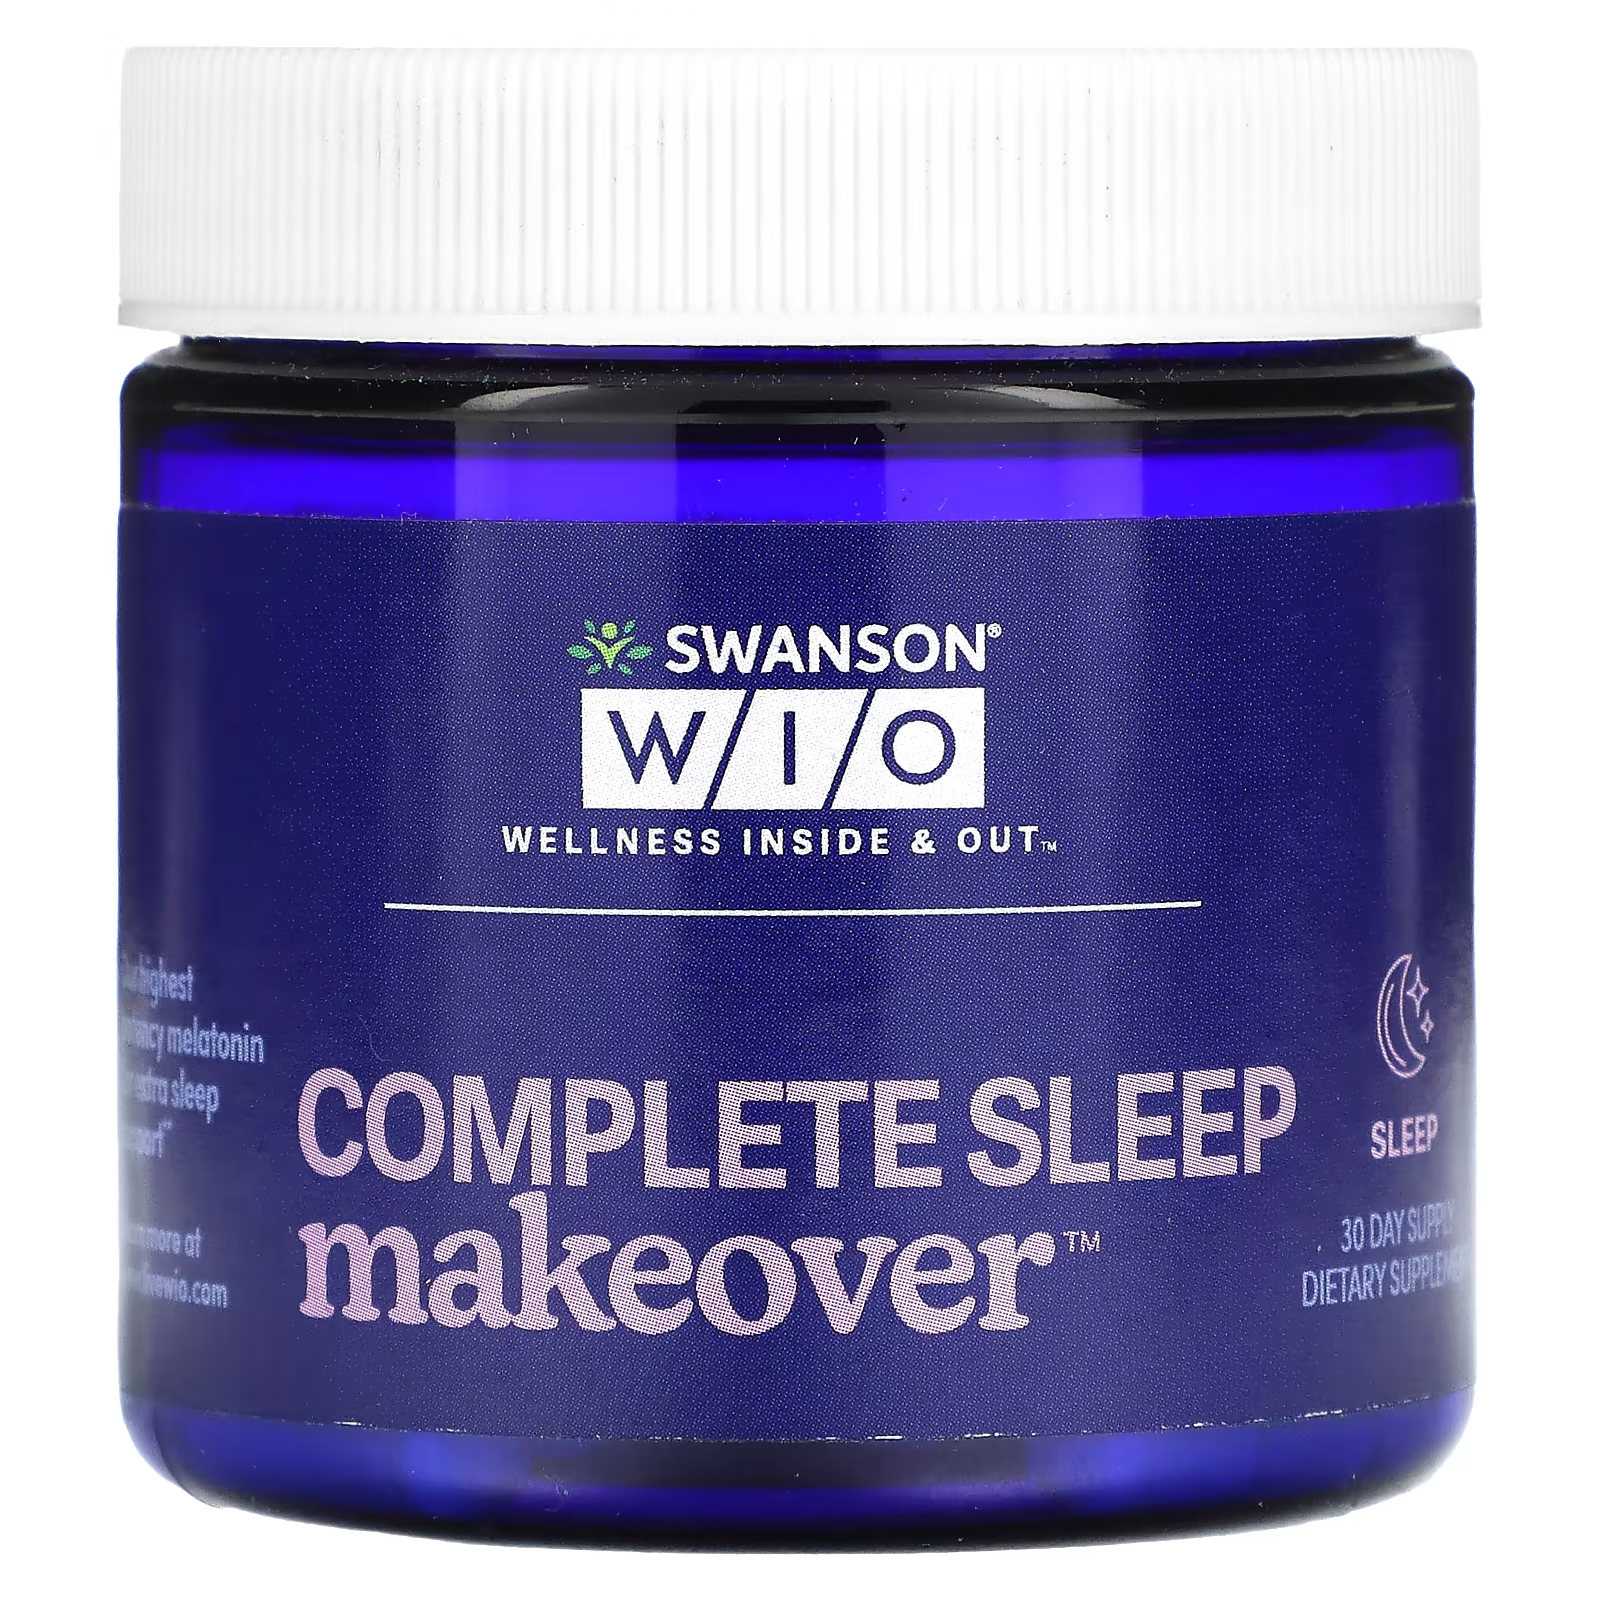 Swanson WIO Complete Sleep Makeover Sleep 30-дневный запас swanson wio идеальные условия работы 30 дневный запас